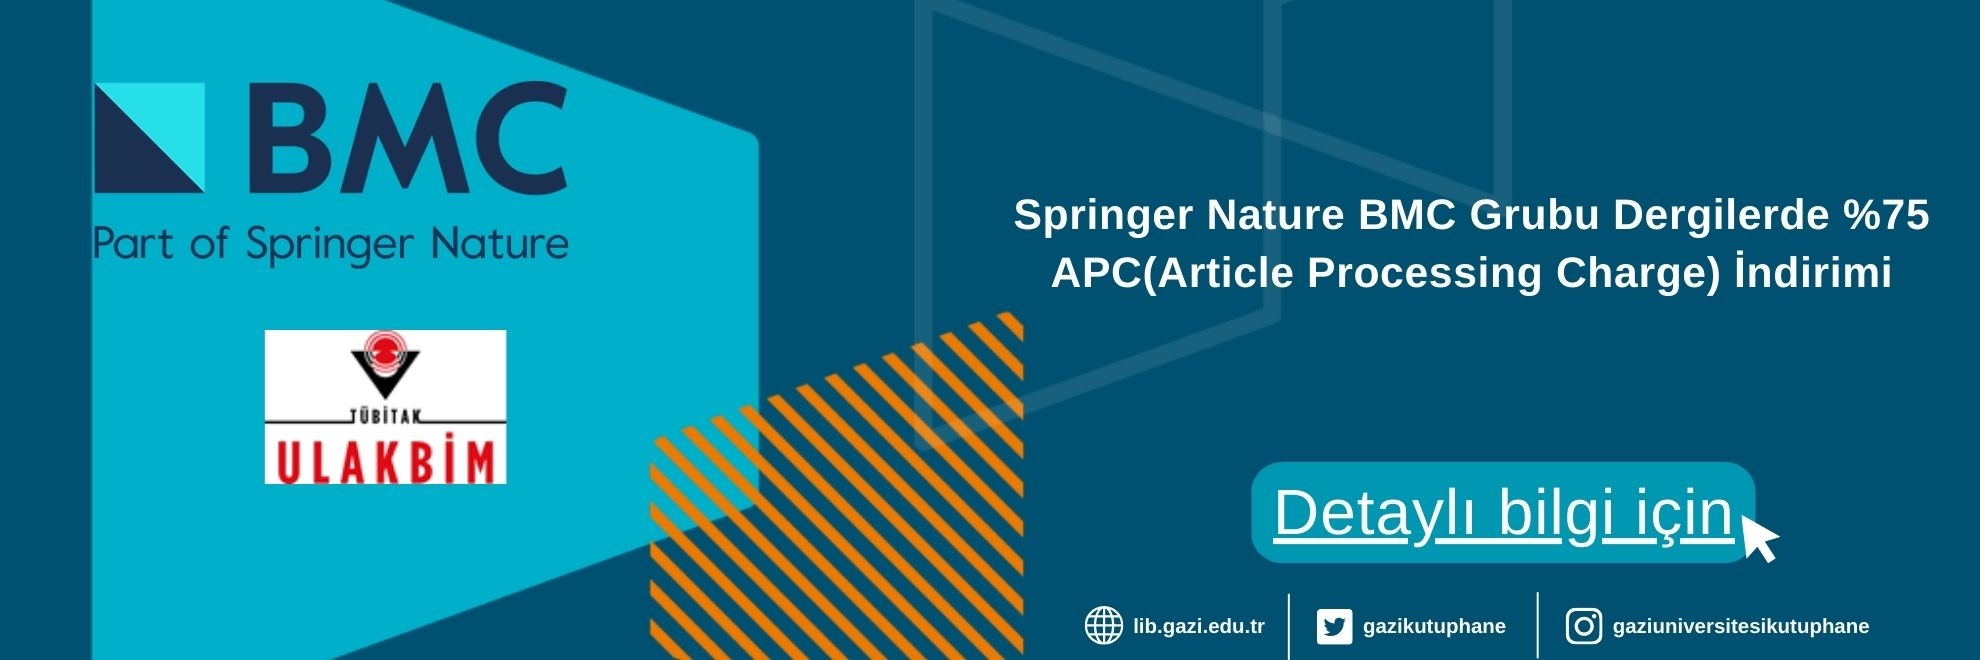 Springer Nature BMC Grubu Dergilerde APC İndirimi